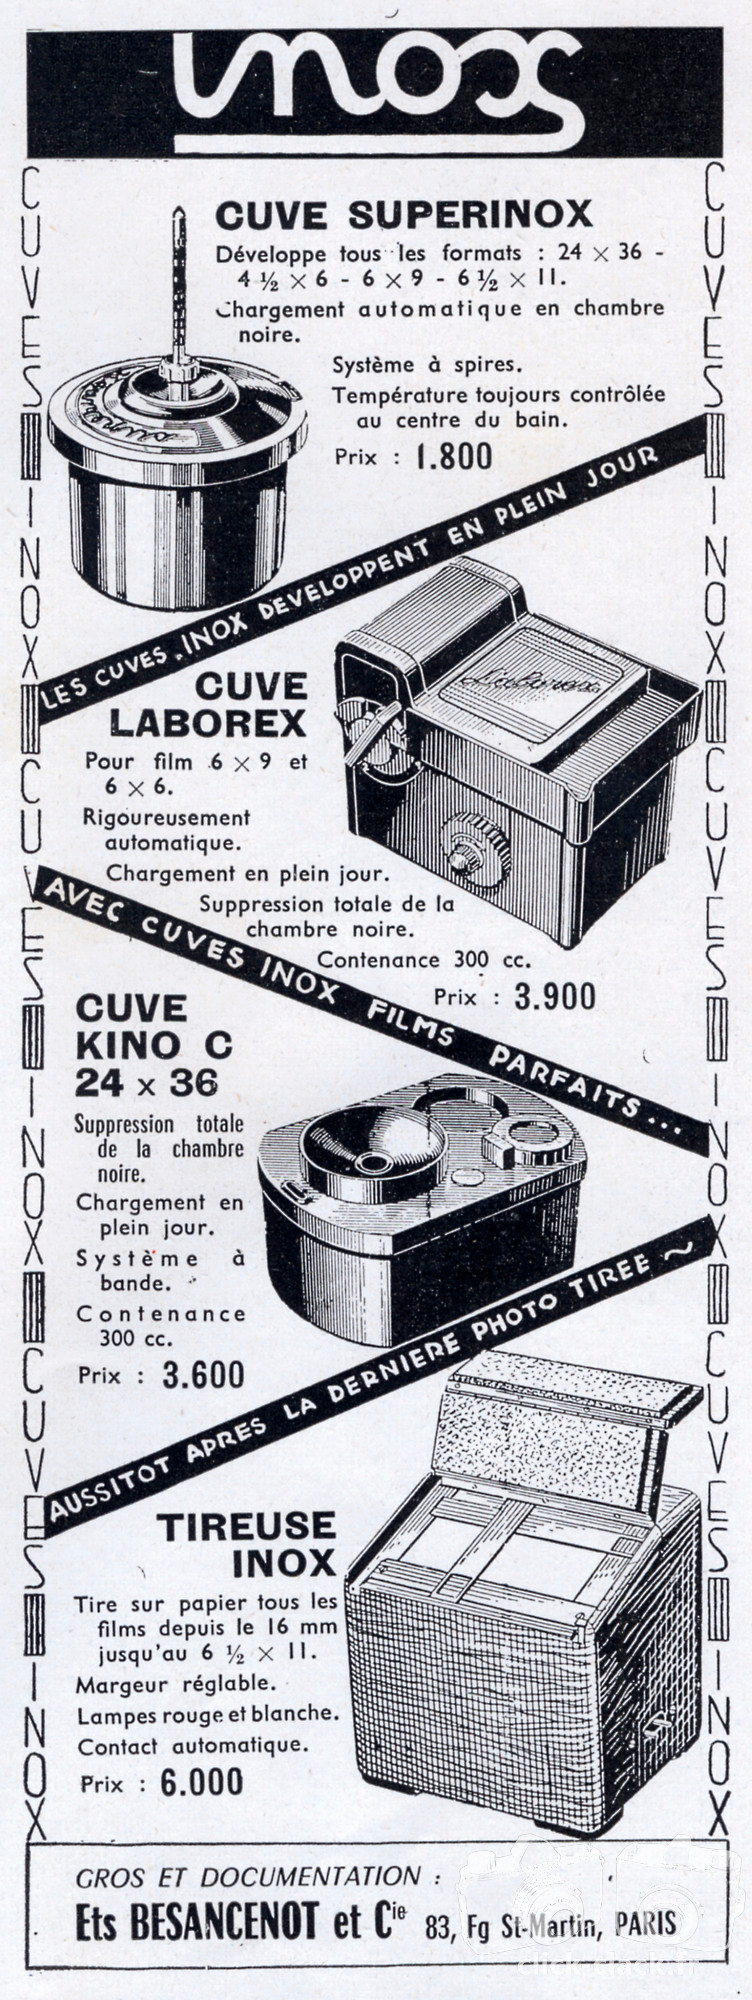 Inox - Cuve Superinox, Cuve Laborex, Cuve Kino C, Tireuse Inox - 1956